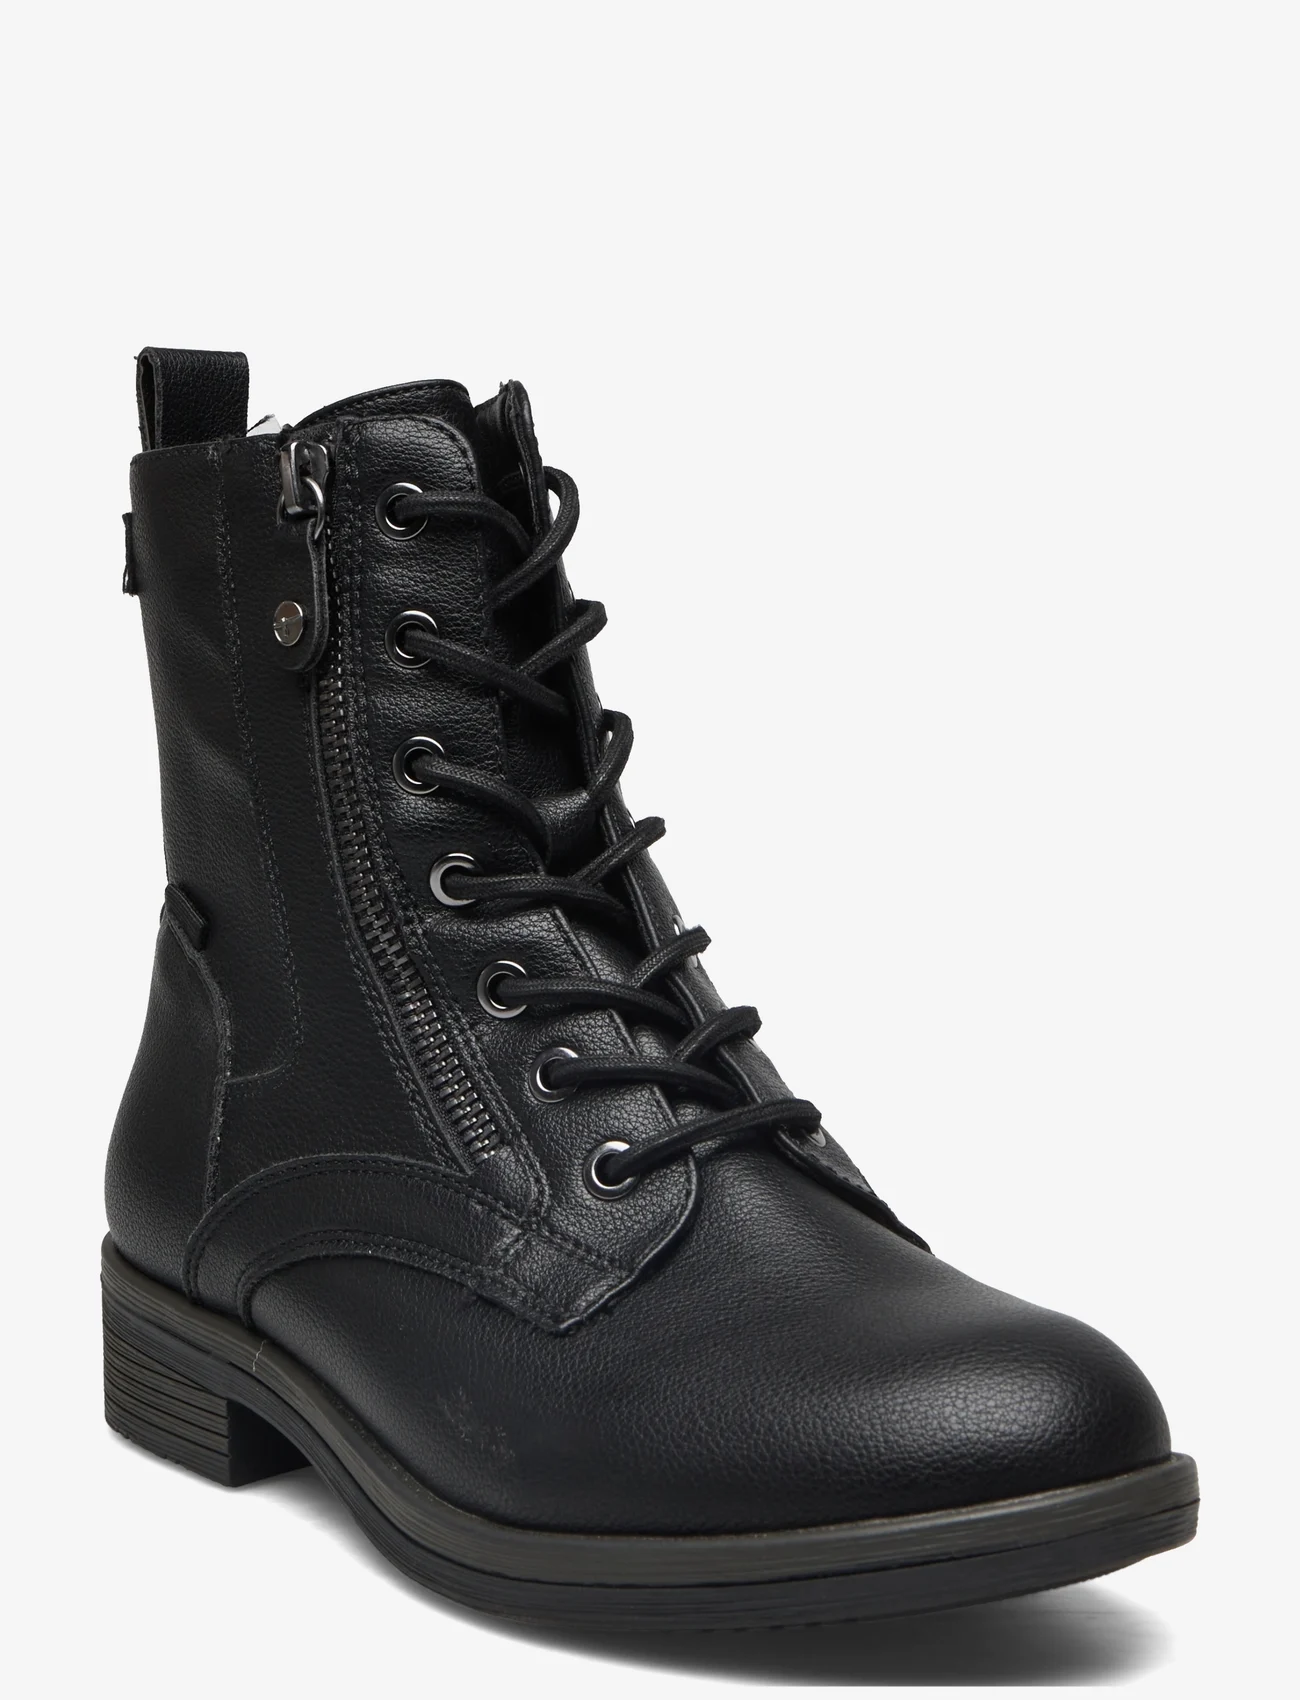 Tamaris - Women Boots - snørestøvler - black - 0